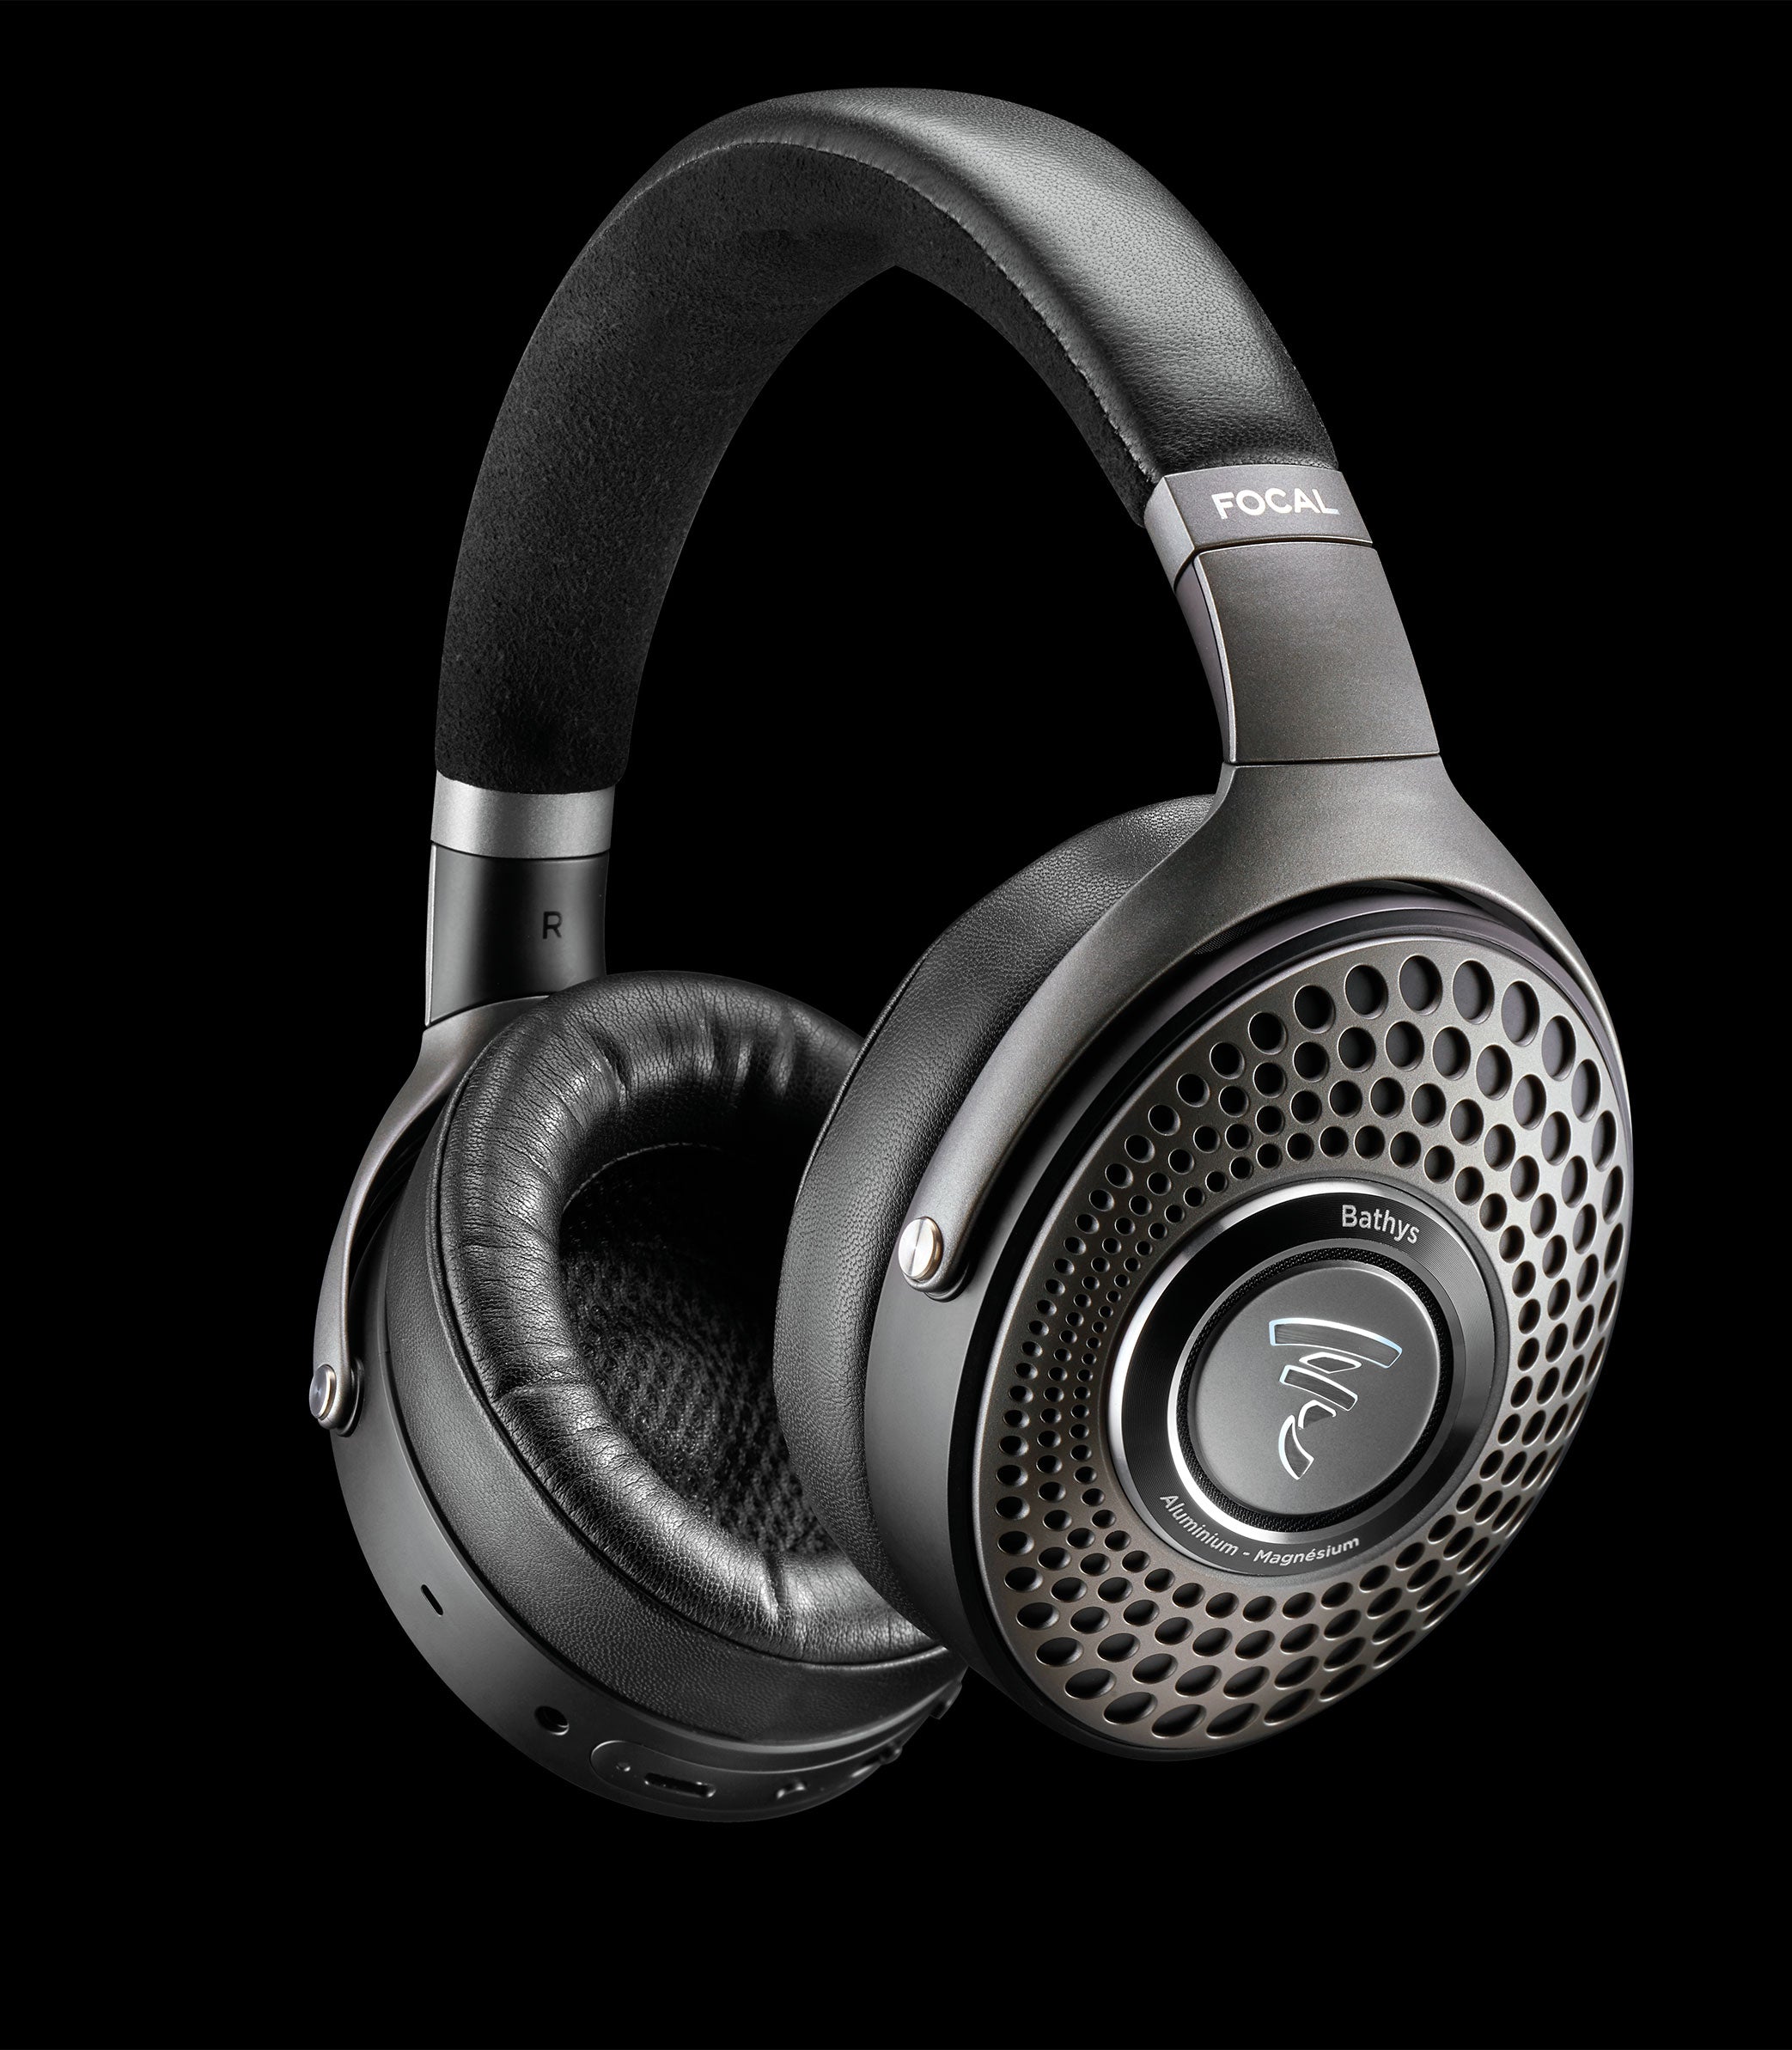 Focal Bathys Wireless noise-cancelling headphones 2022